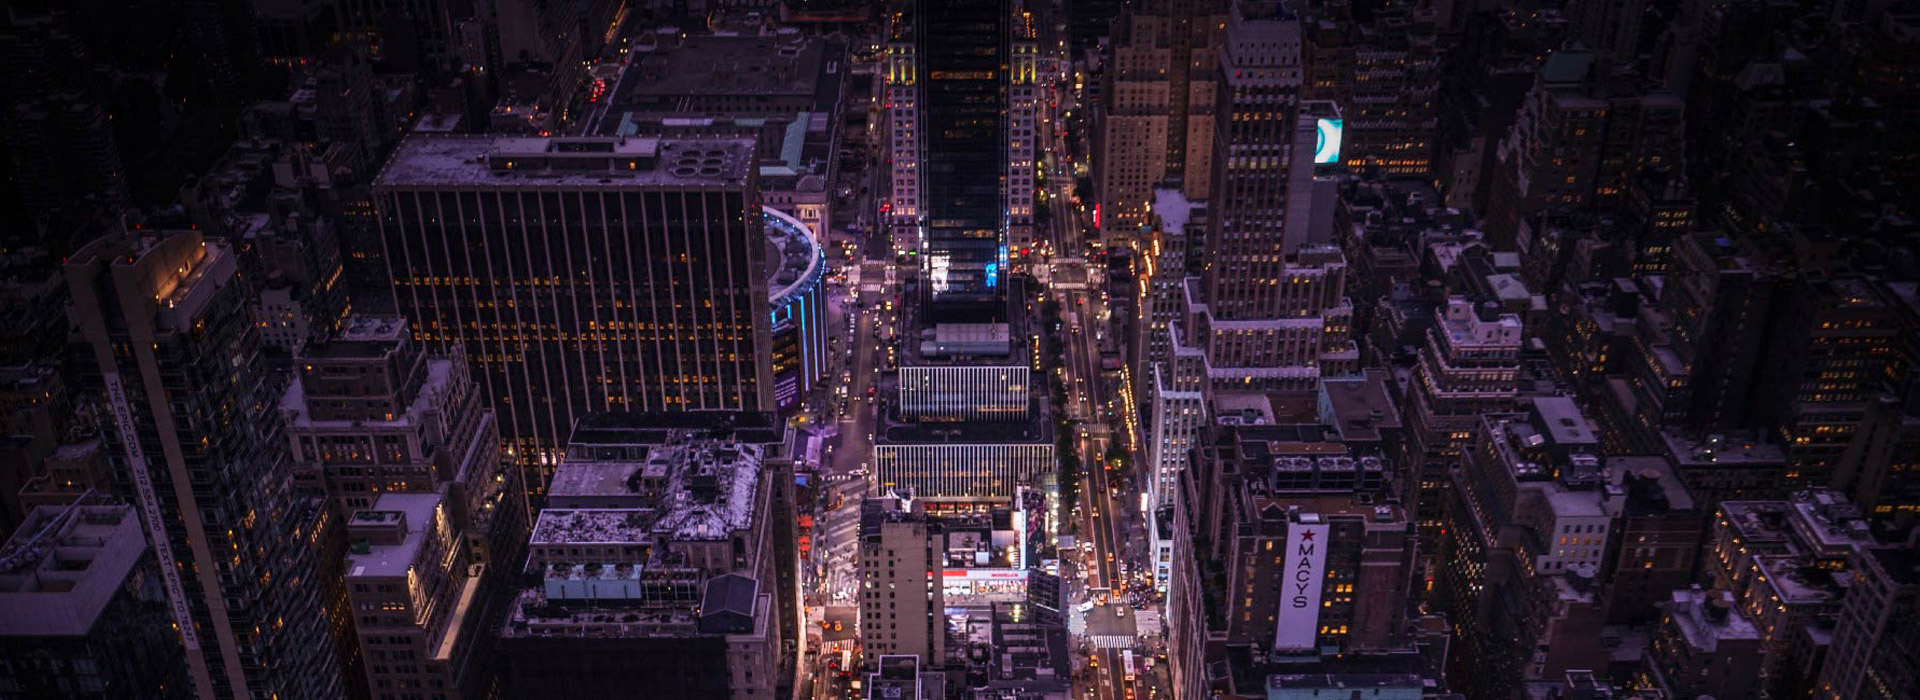 City image of macys and new york purple